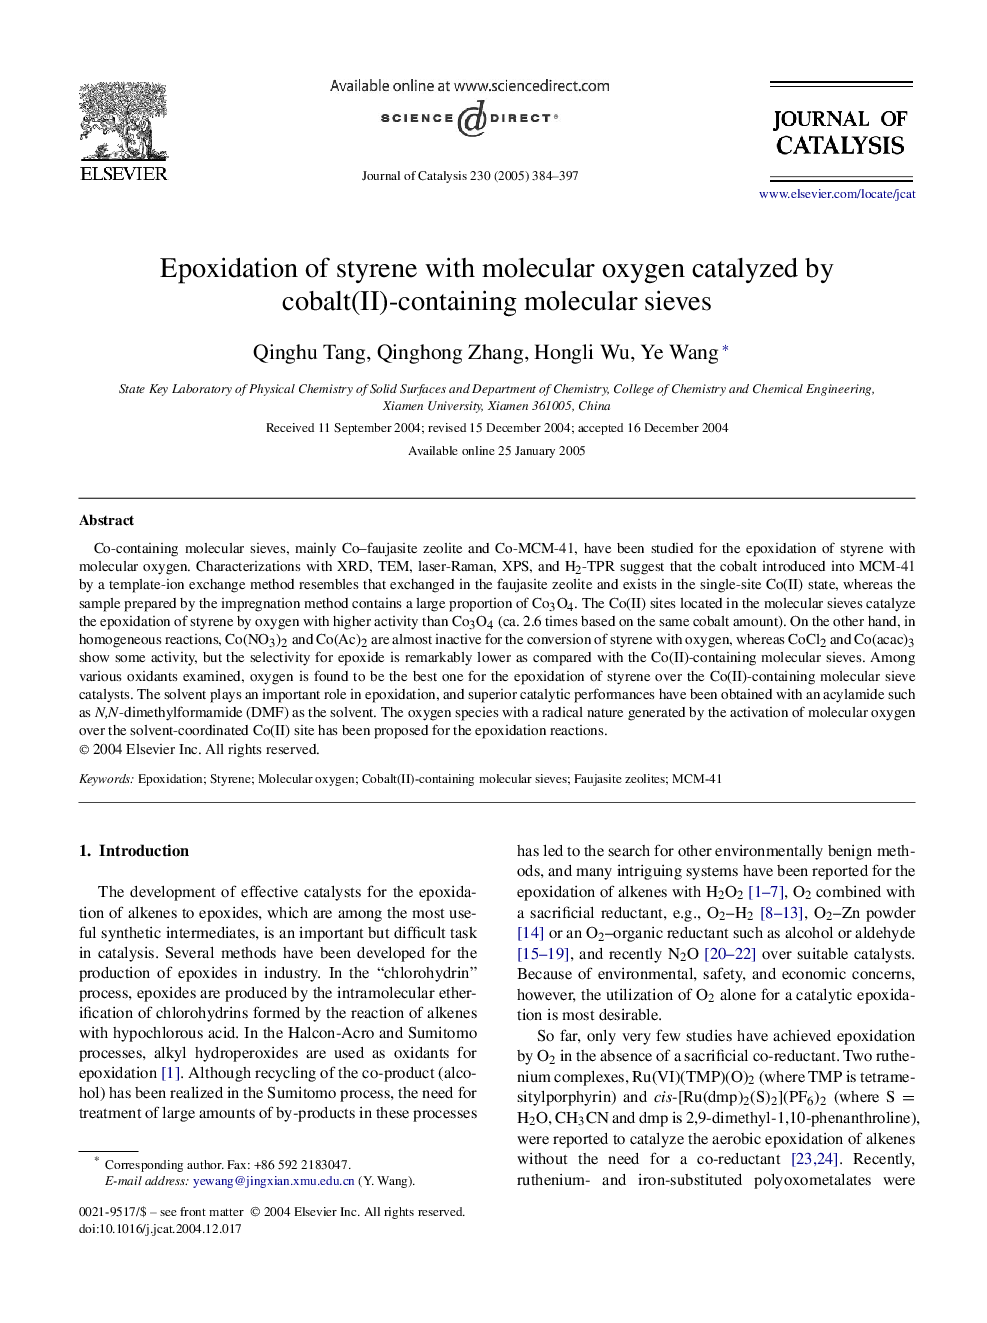 Epoxidation of styrene with molecular oxygen catalyzed by cobalt(II)-containing molecular sieves